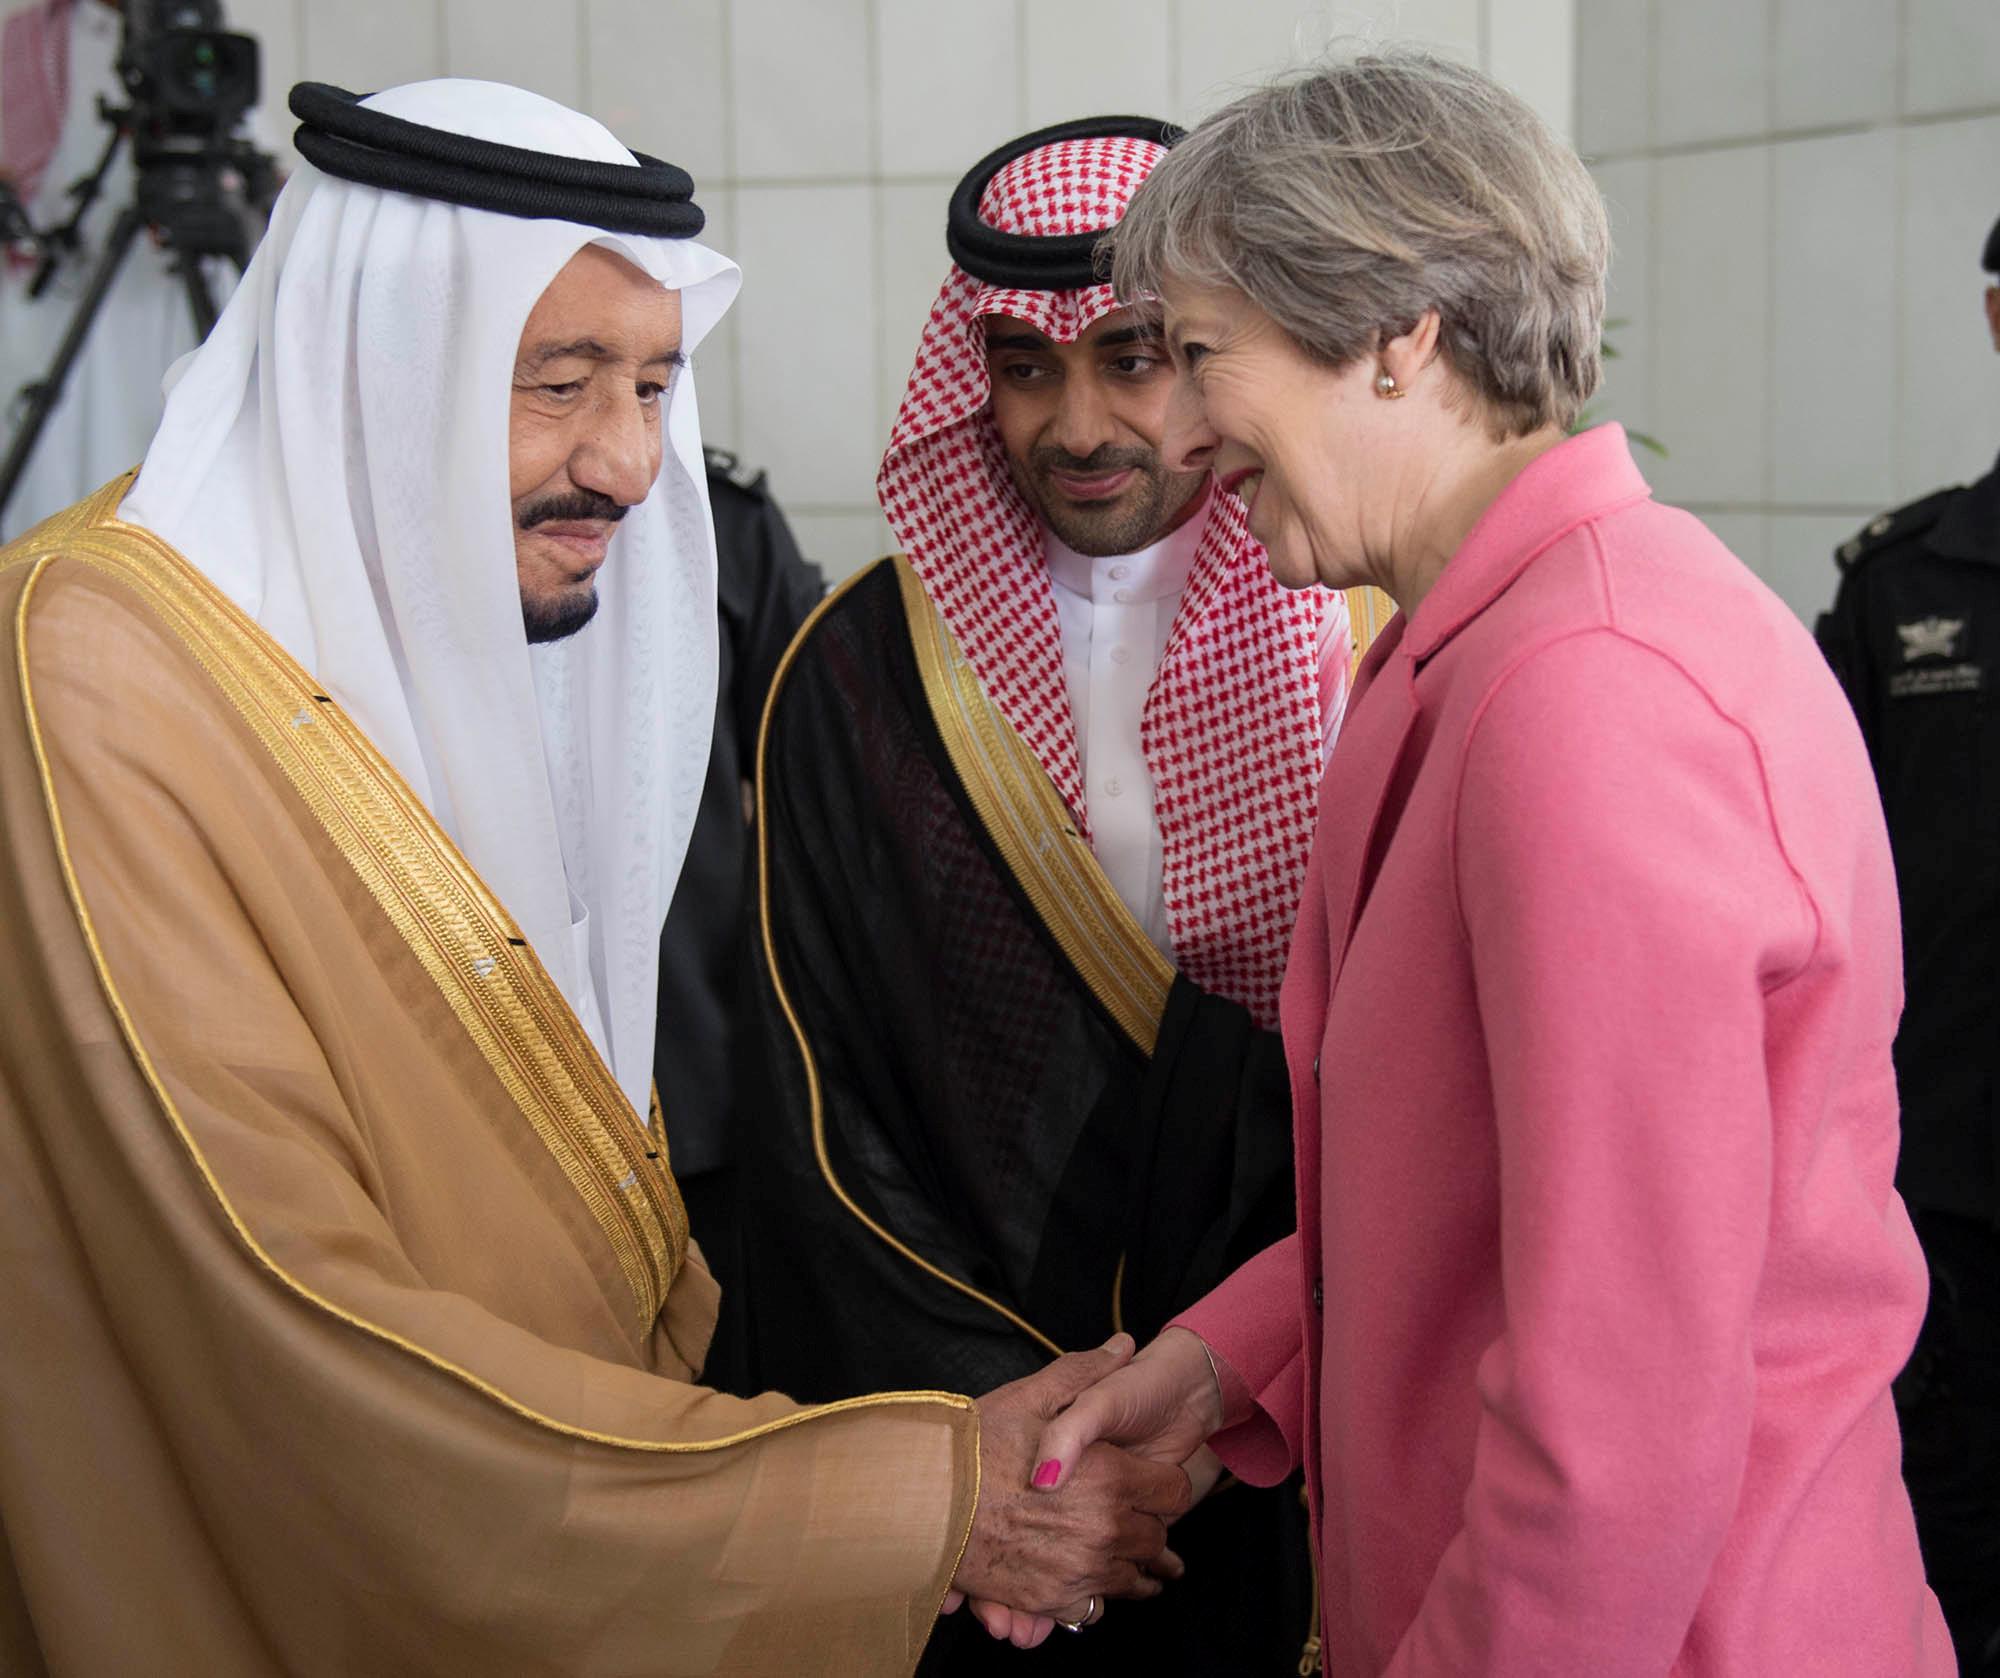 Theresa May meets King Salman bin Abdulaziz Al Saud during her visit to Riyadh in April